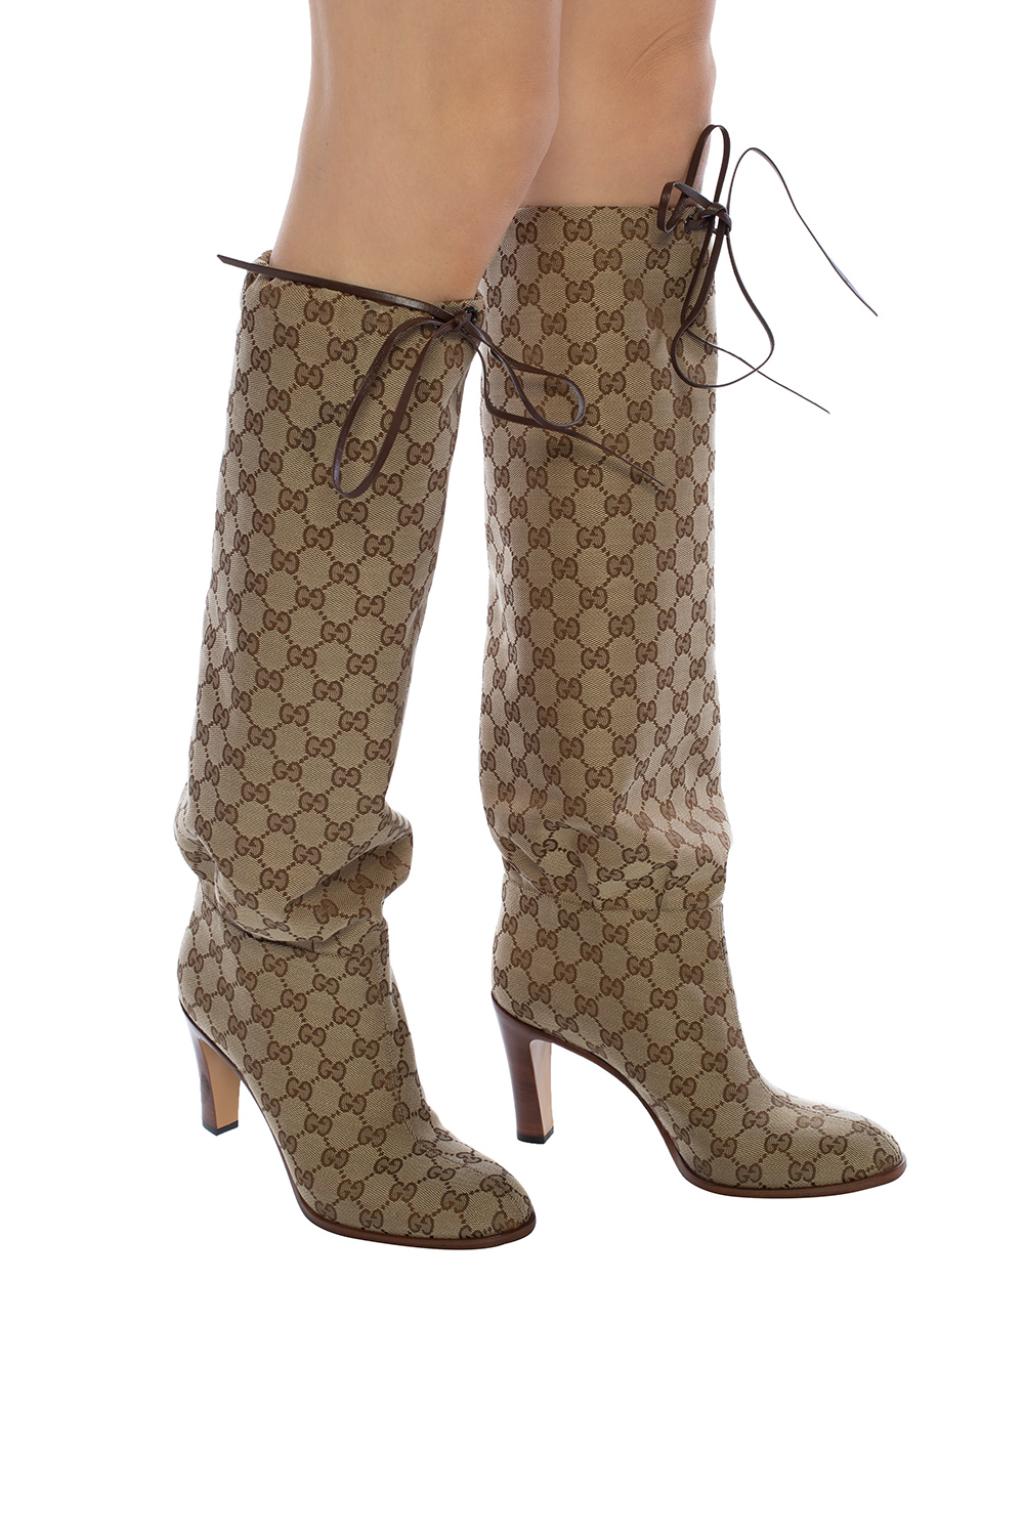 Brown 'GG Original' heeled boots Gucci - Vitkac France